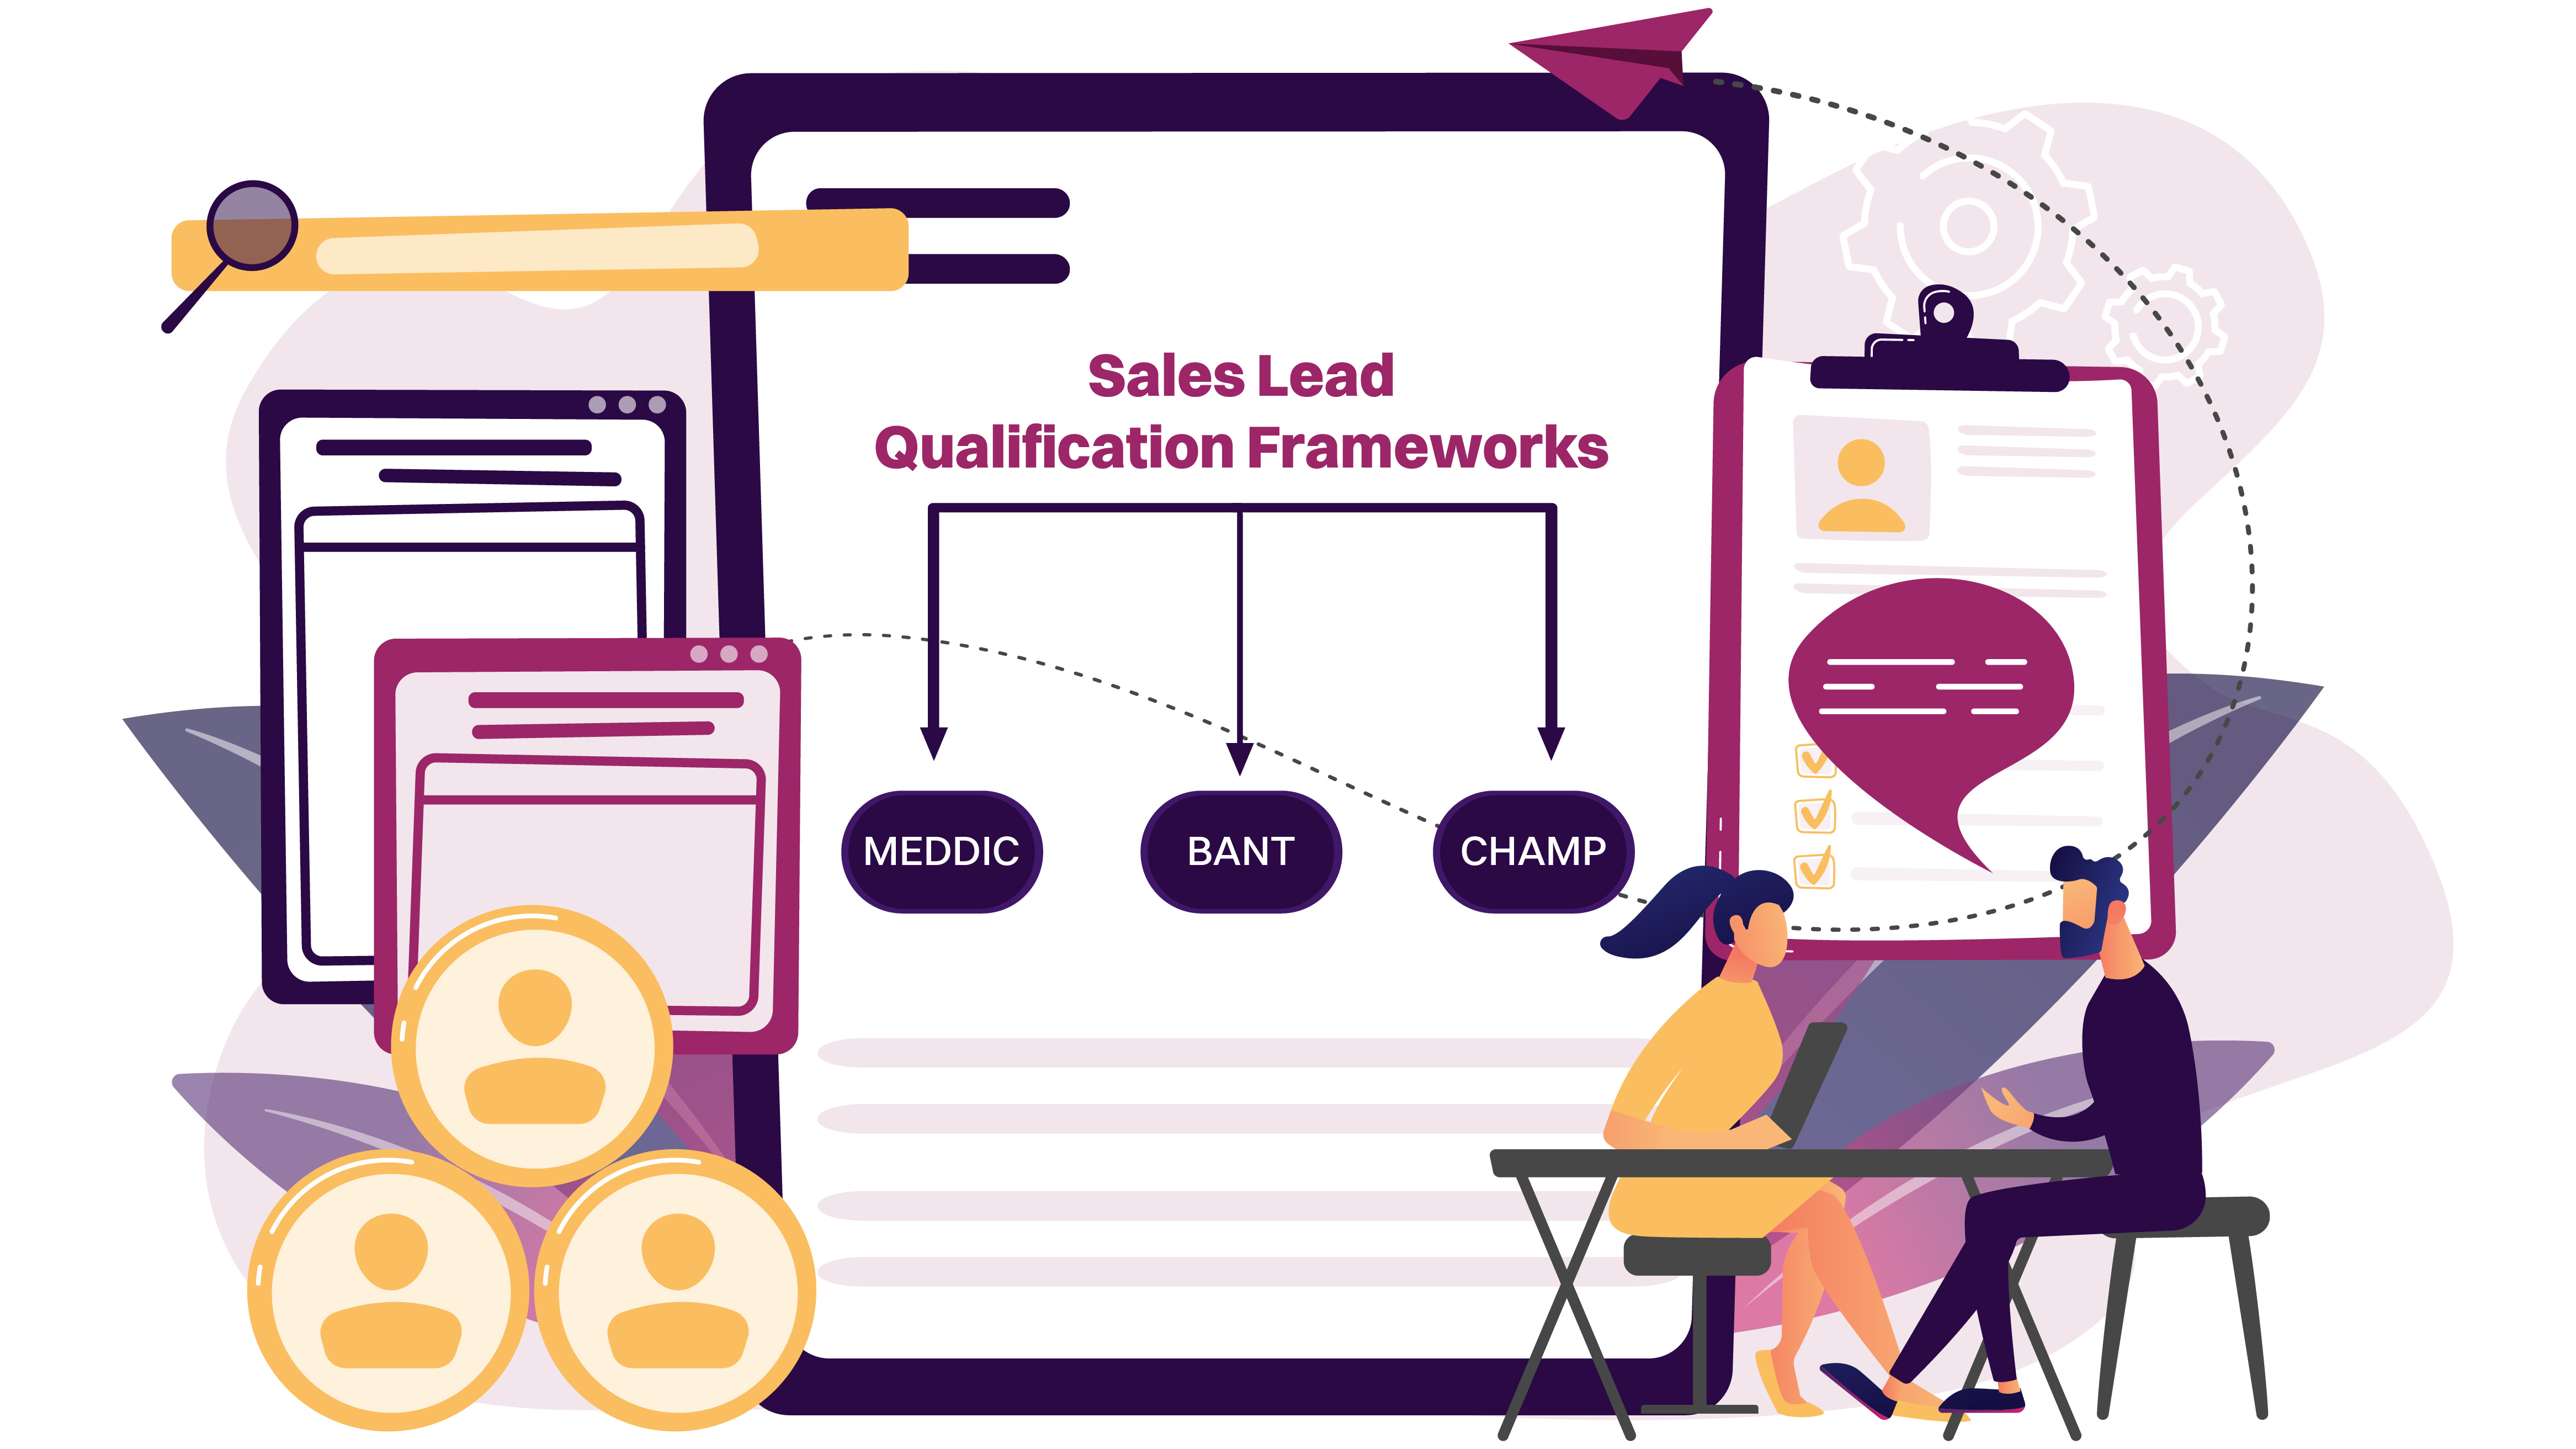 Sales Lead Qualification Frameworks (MEDDIC vs BANT vs CHAMP)